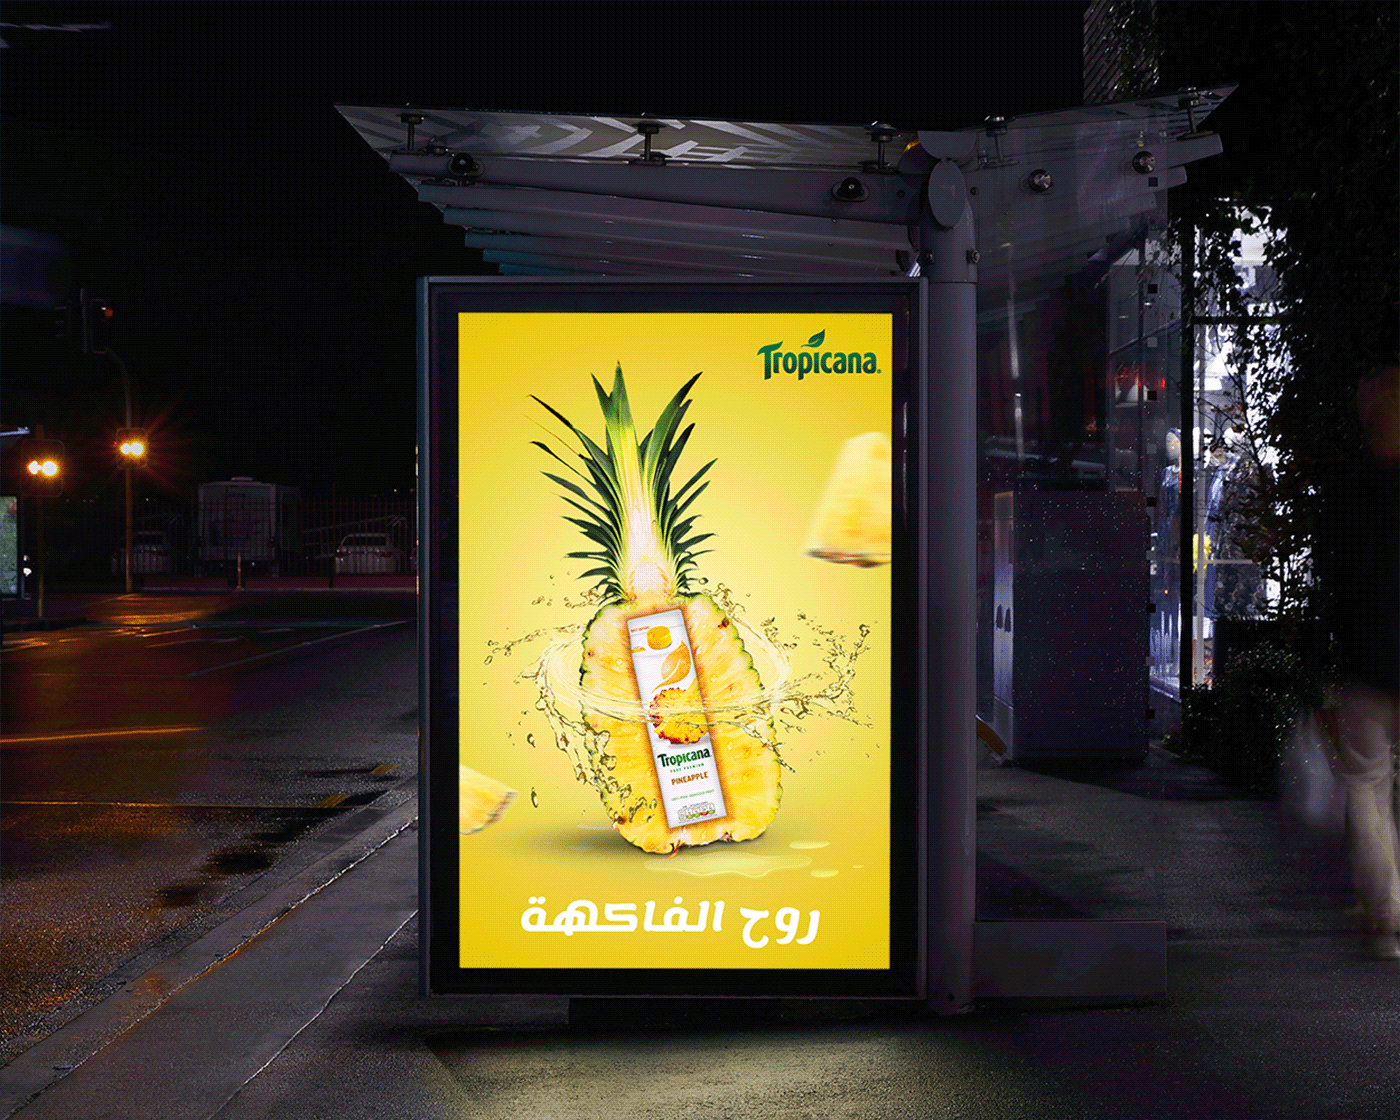 Tropicana juice Pineapple apple orange ads Advertising  manipulation creative social media